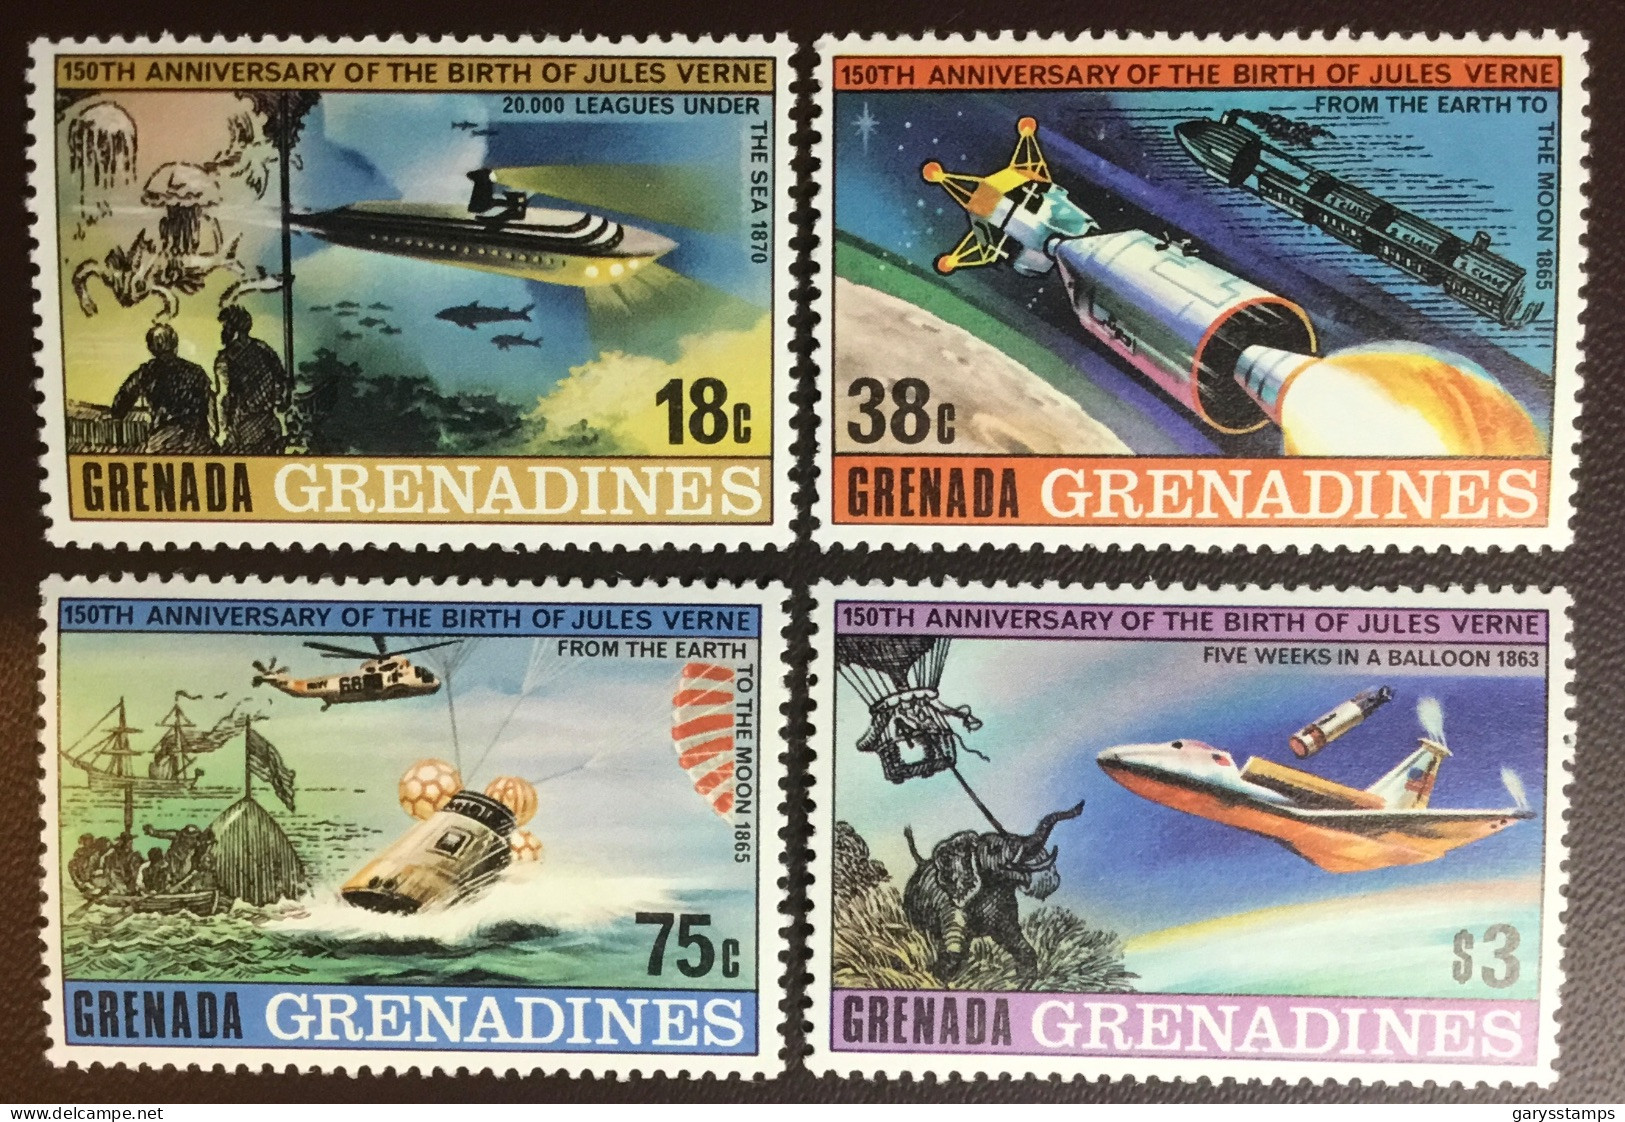 Grenada Grenadines 1979 Jules Verne Anniversary MNH - Grenada (1974-...)